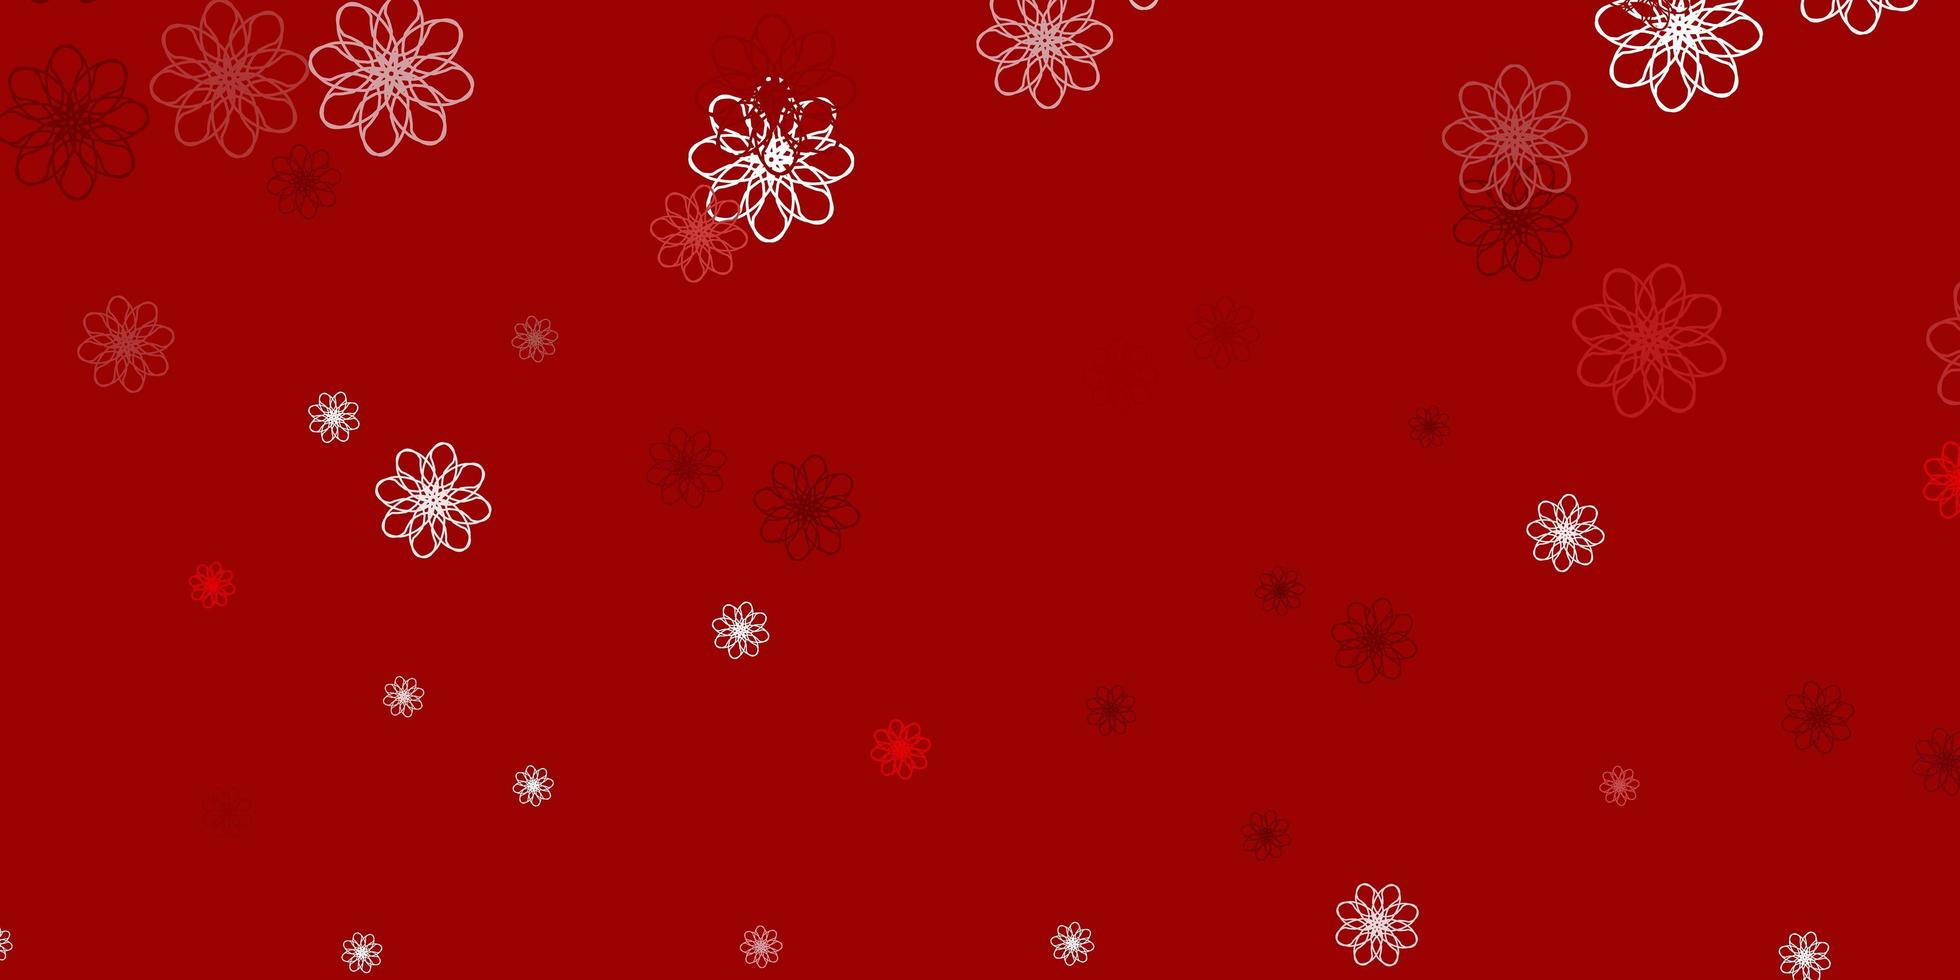 textura de doodle de vector rosa claro, rojo con flores.